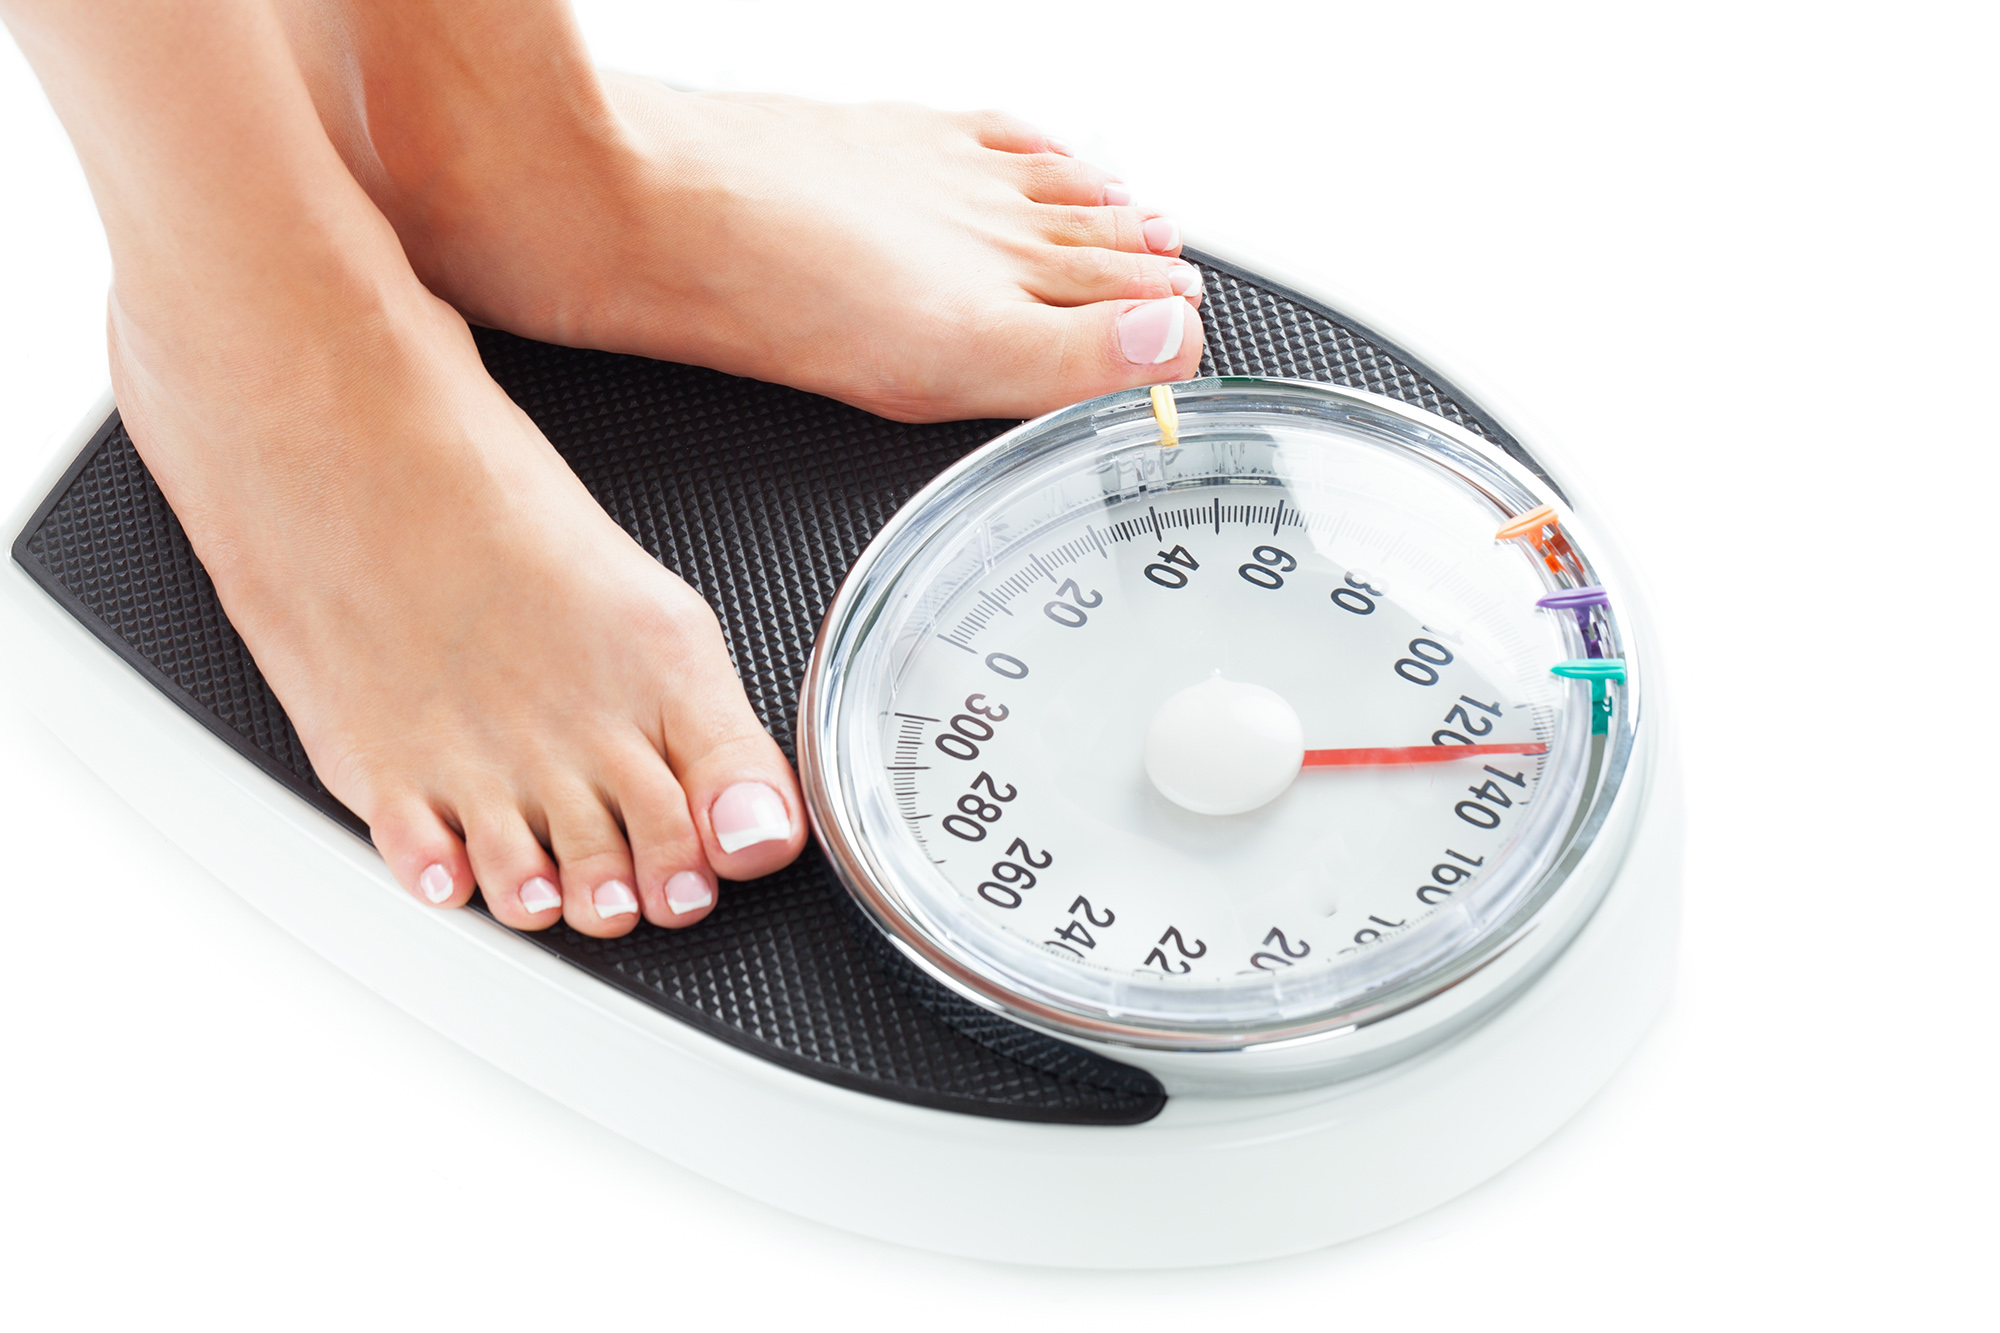 Sobrepeso pode agravar a endometriose?